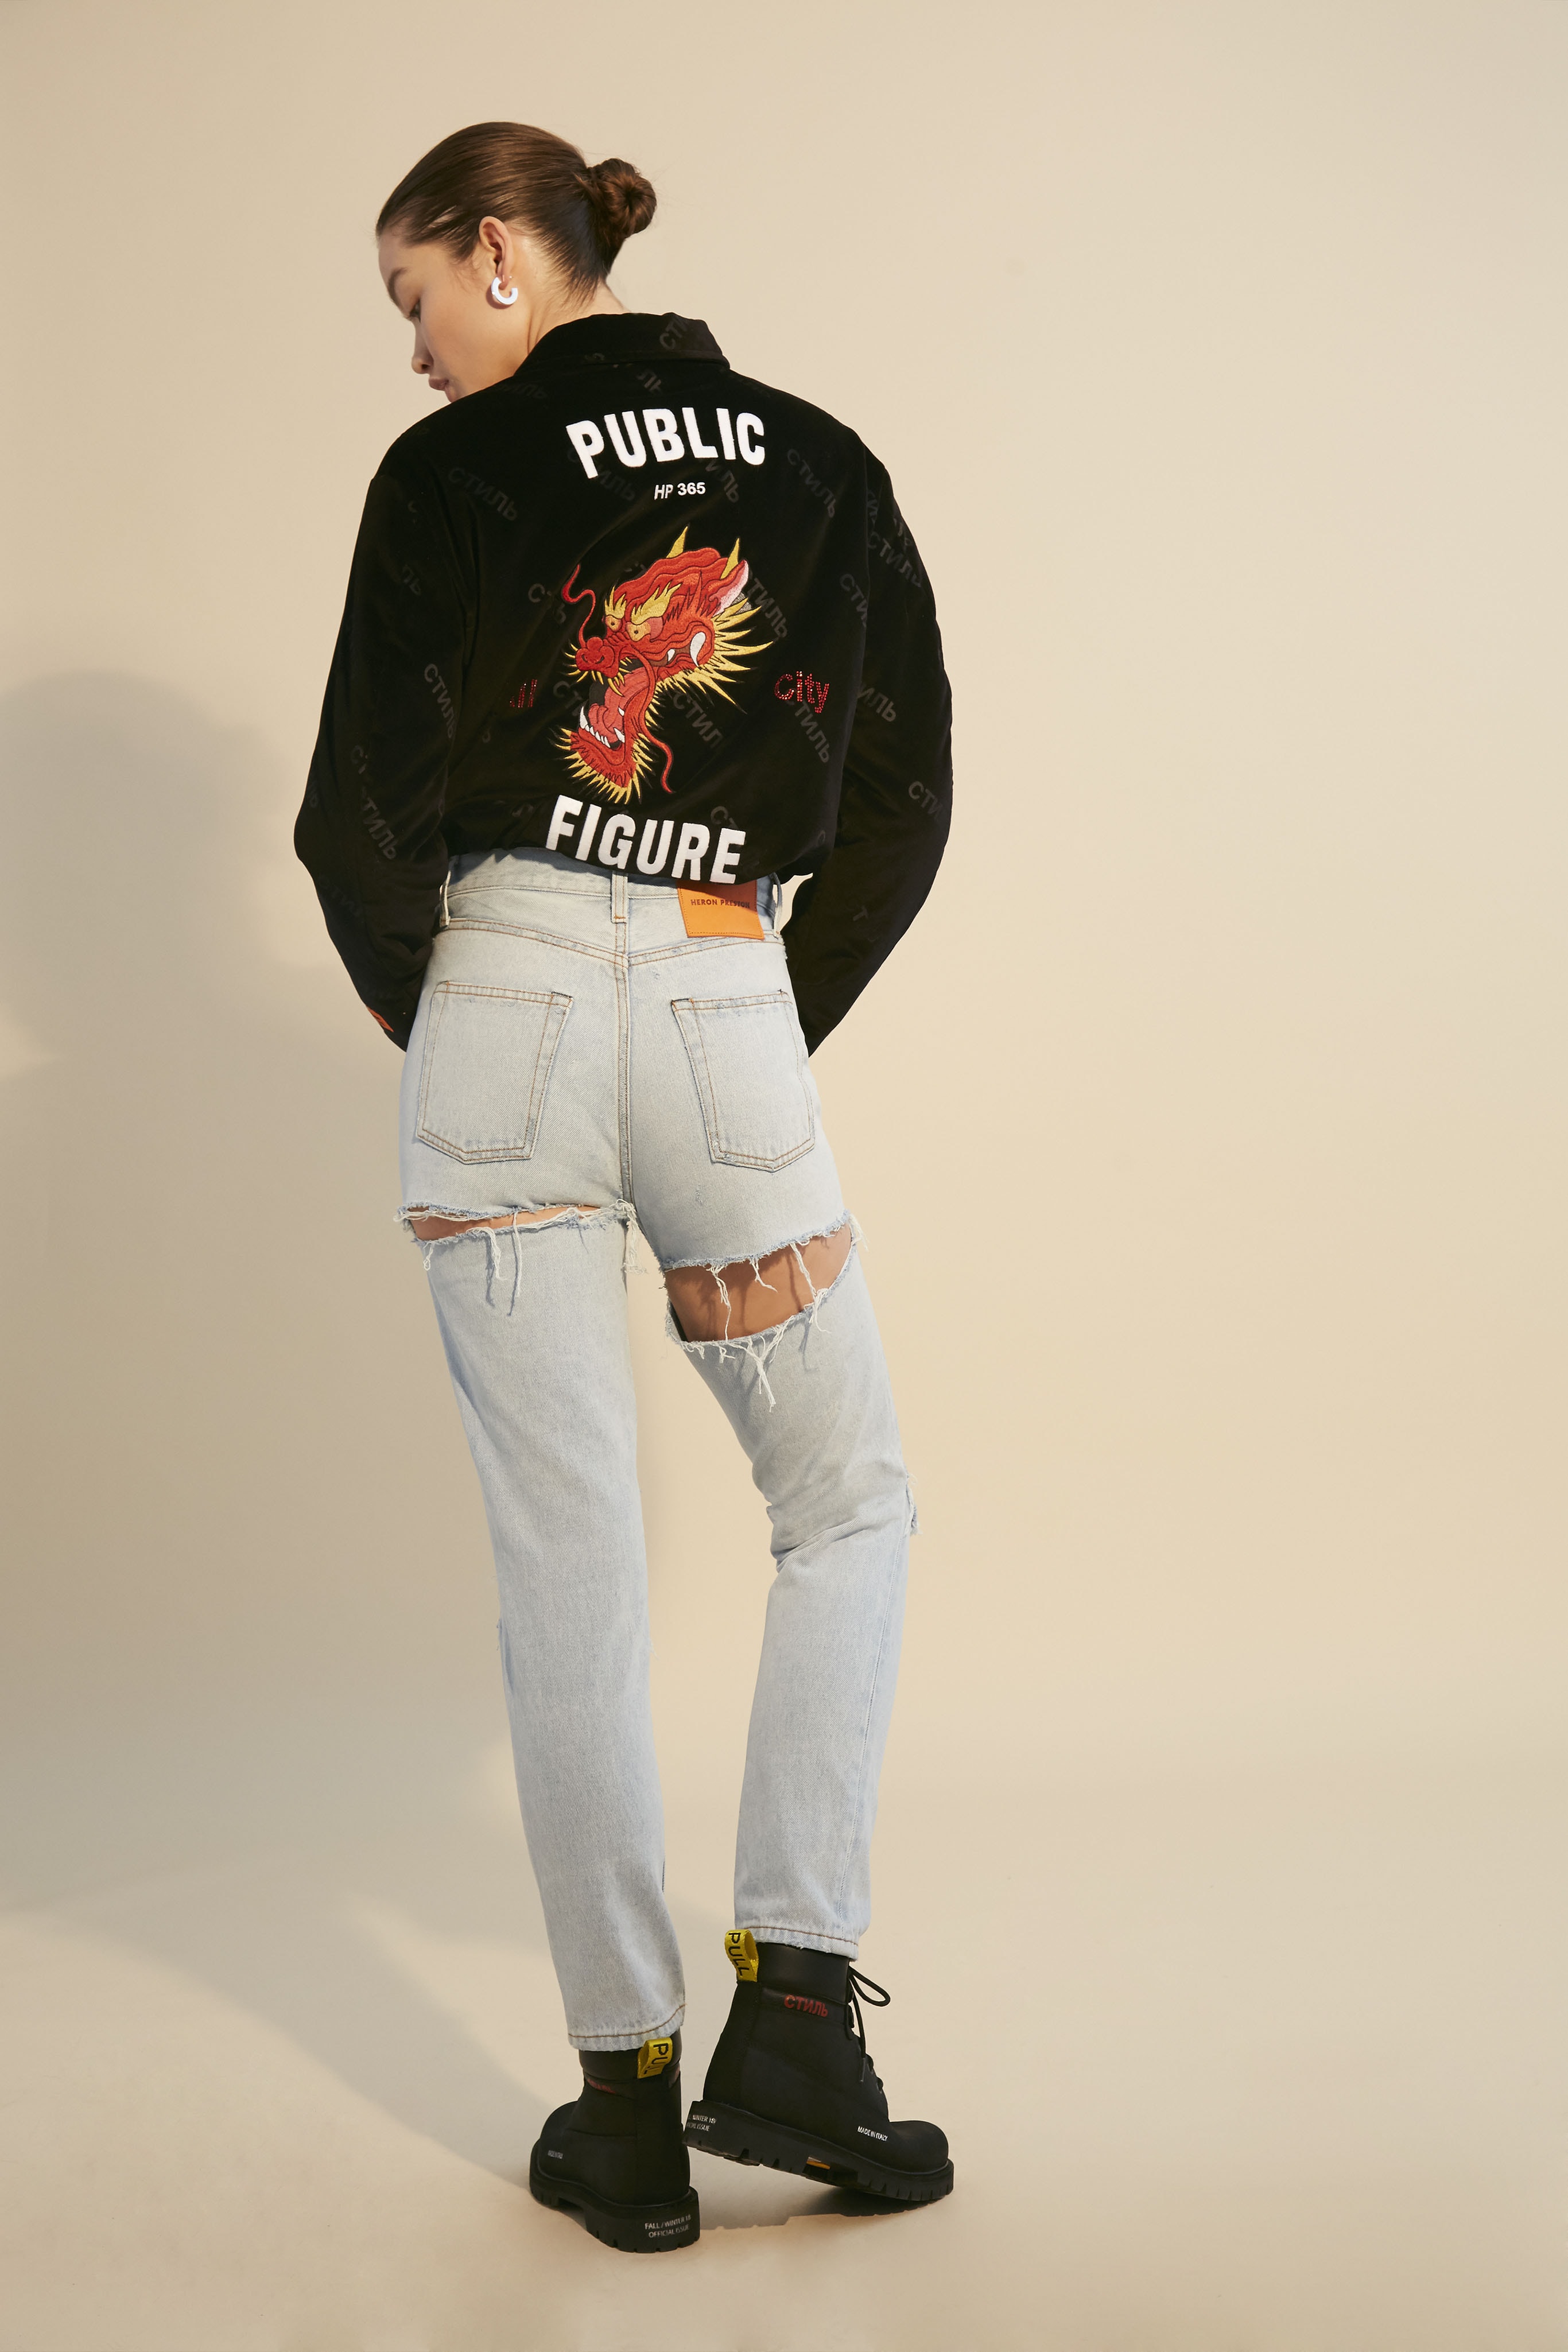 Heron Preston 2018 Fall Winter "PUBLIC FIGURE" Collection Paris Fashion Week Men's